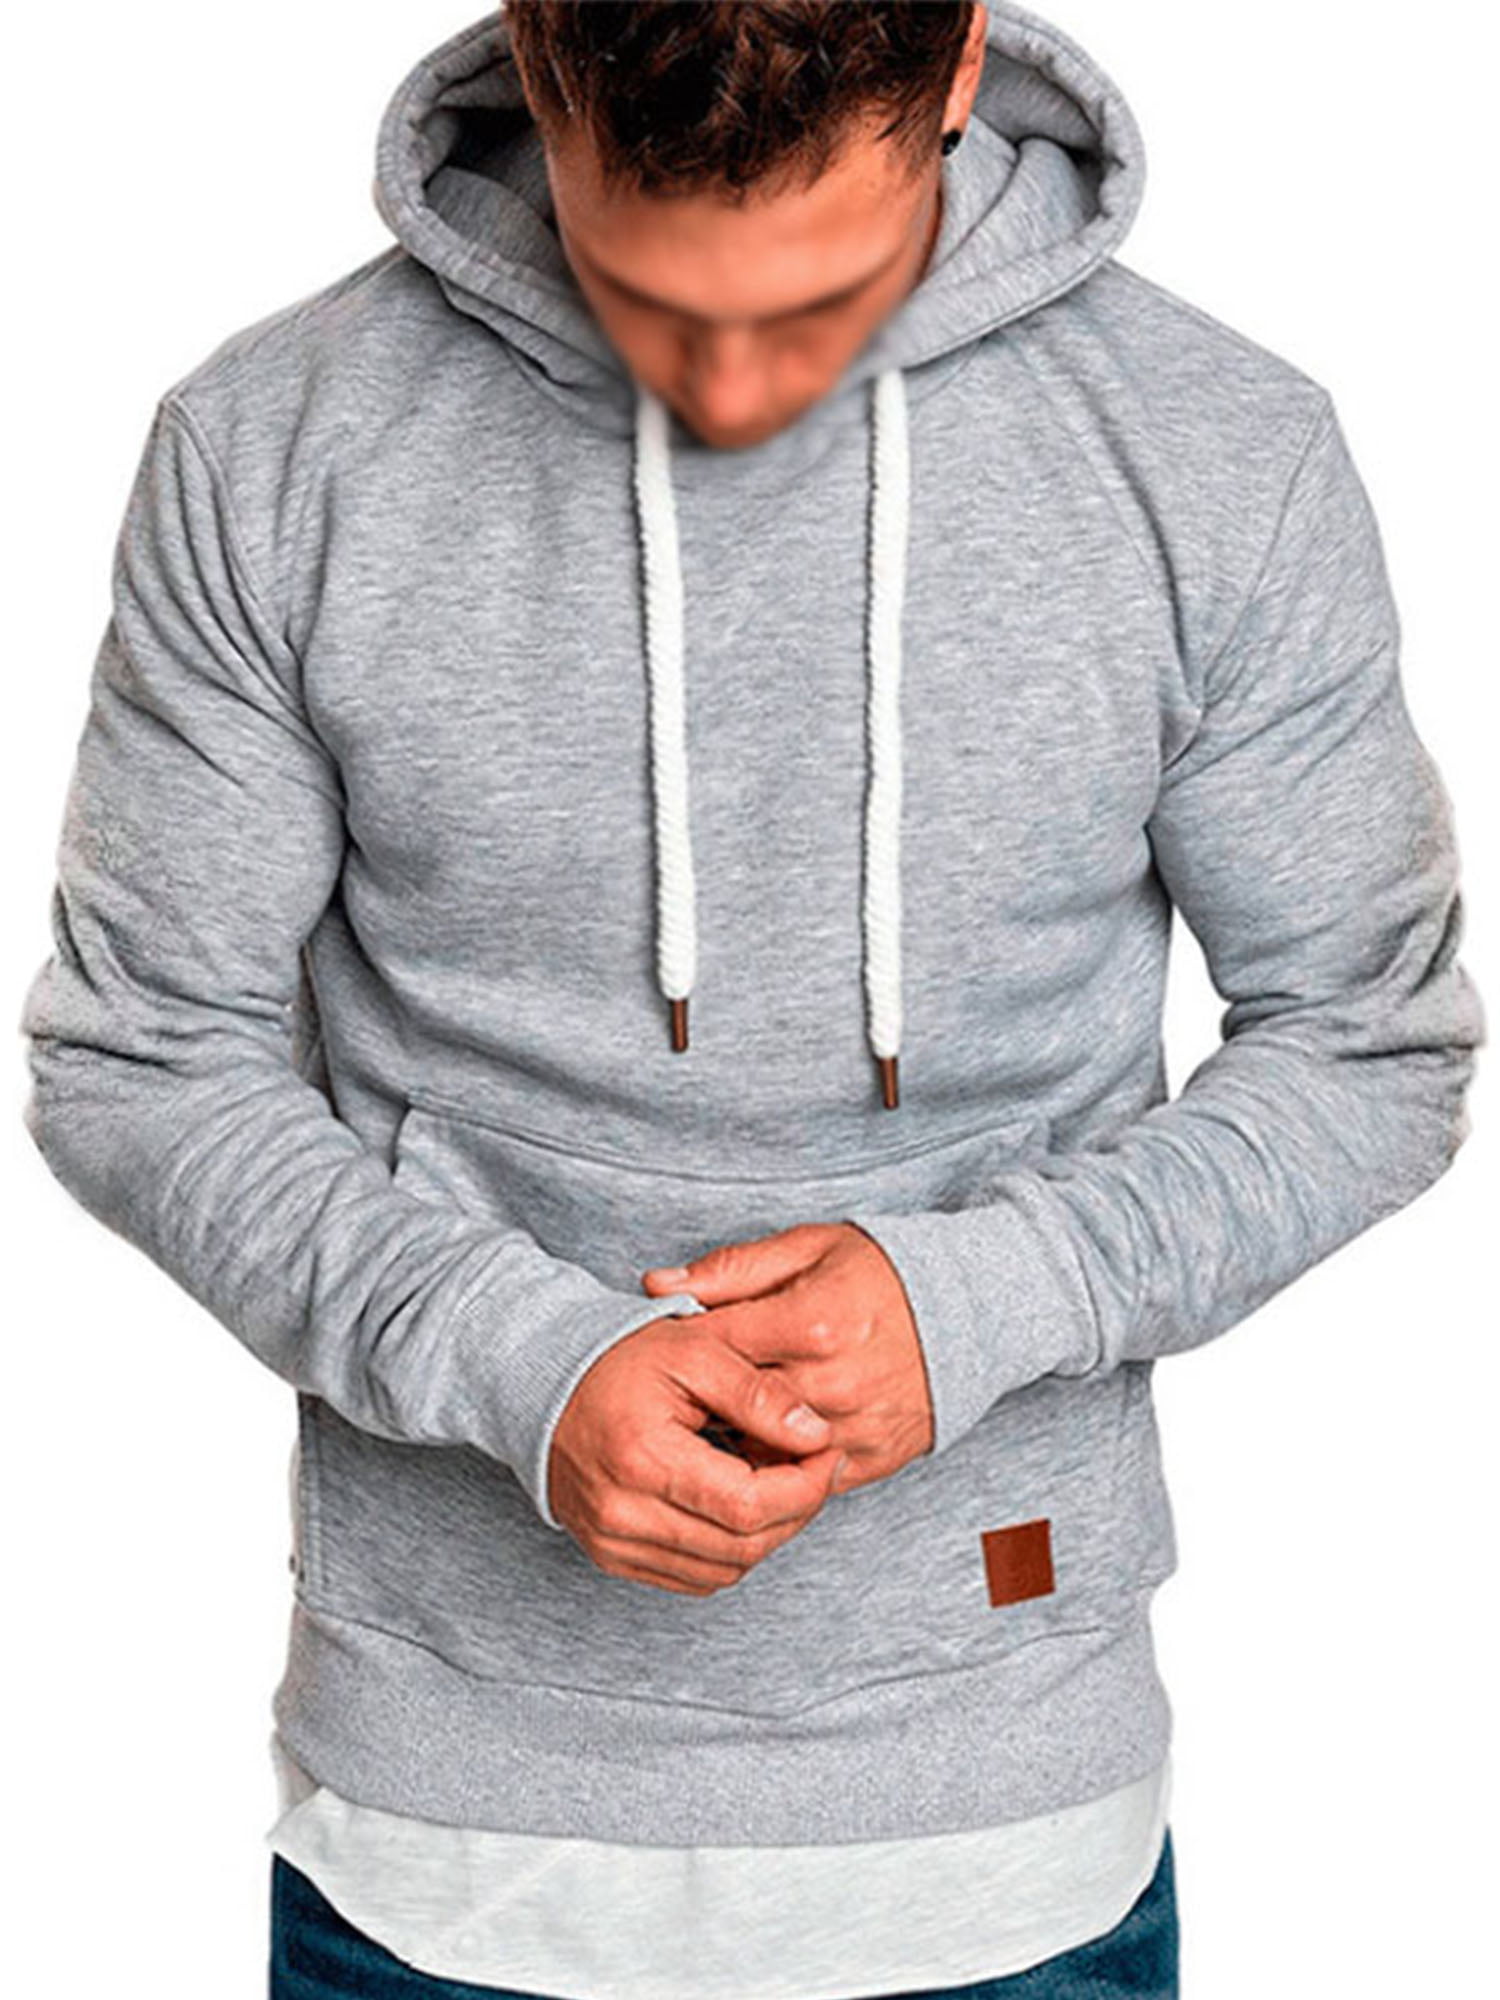 Men's Long Sleeve Hoodie Hooded Sweatshirt Coat Jacket Outwear Jumper Sweater 